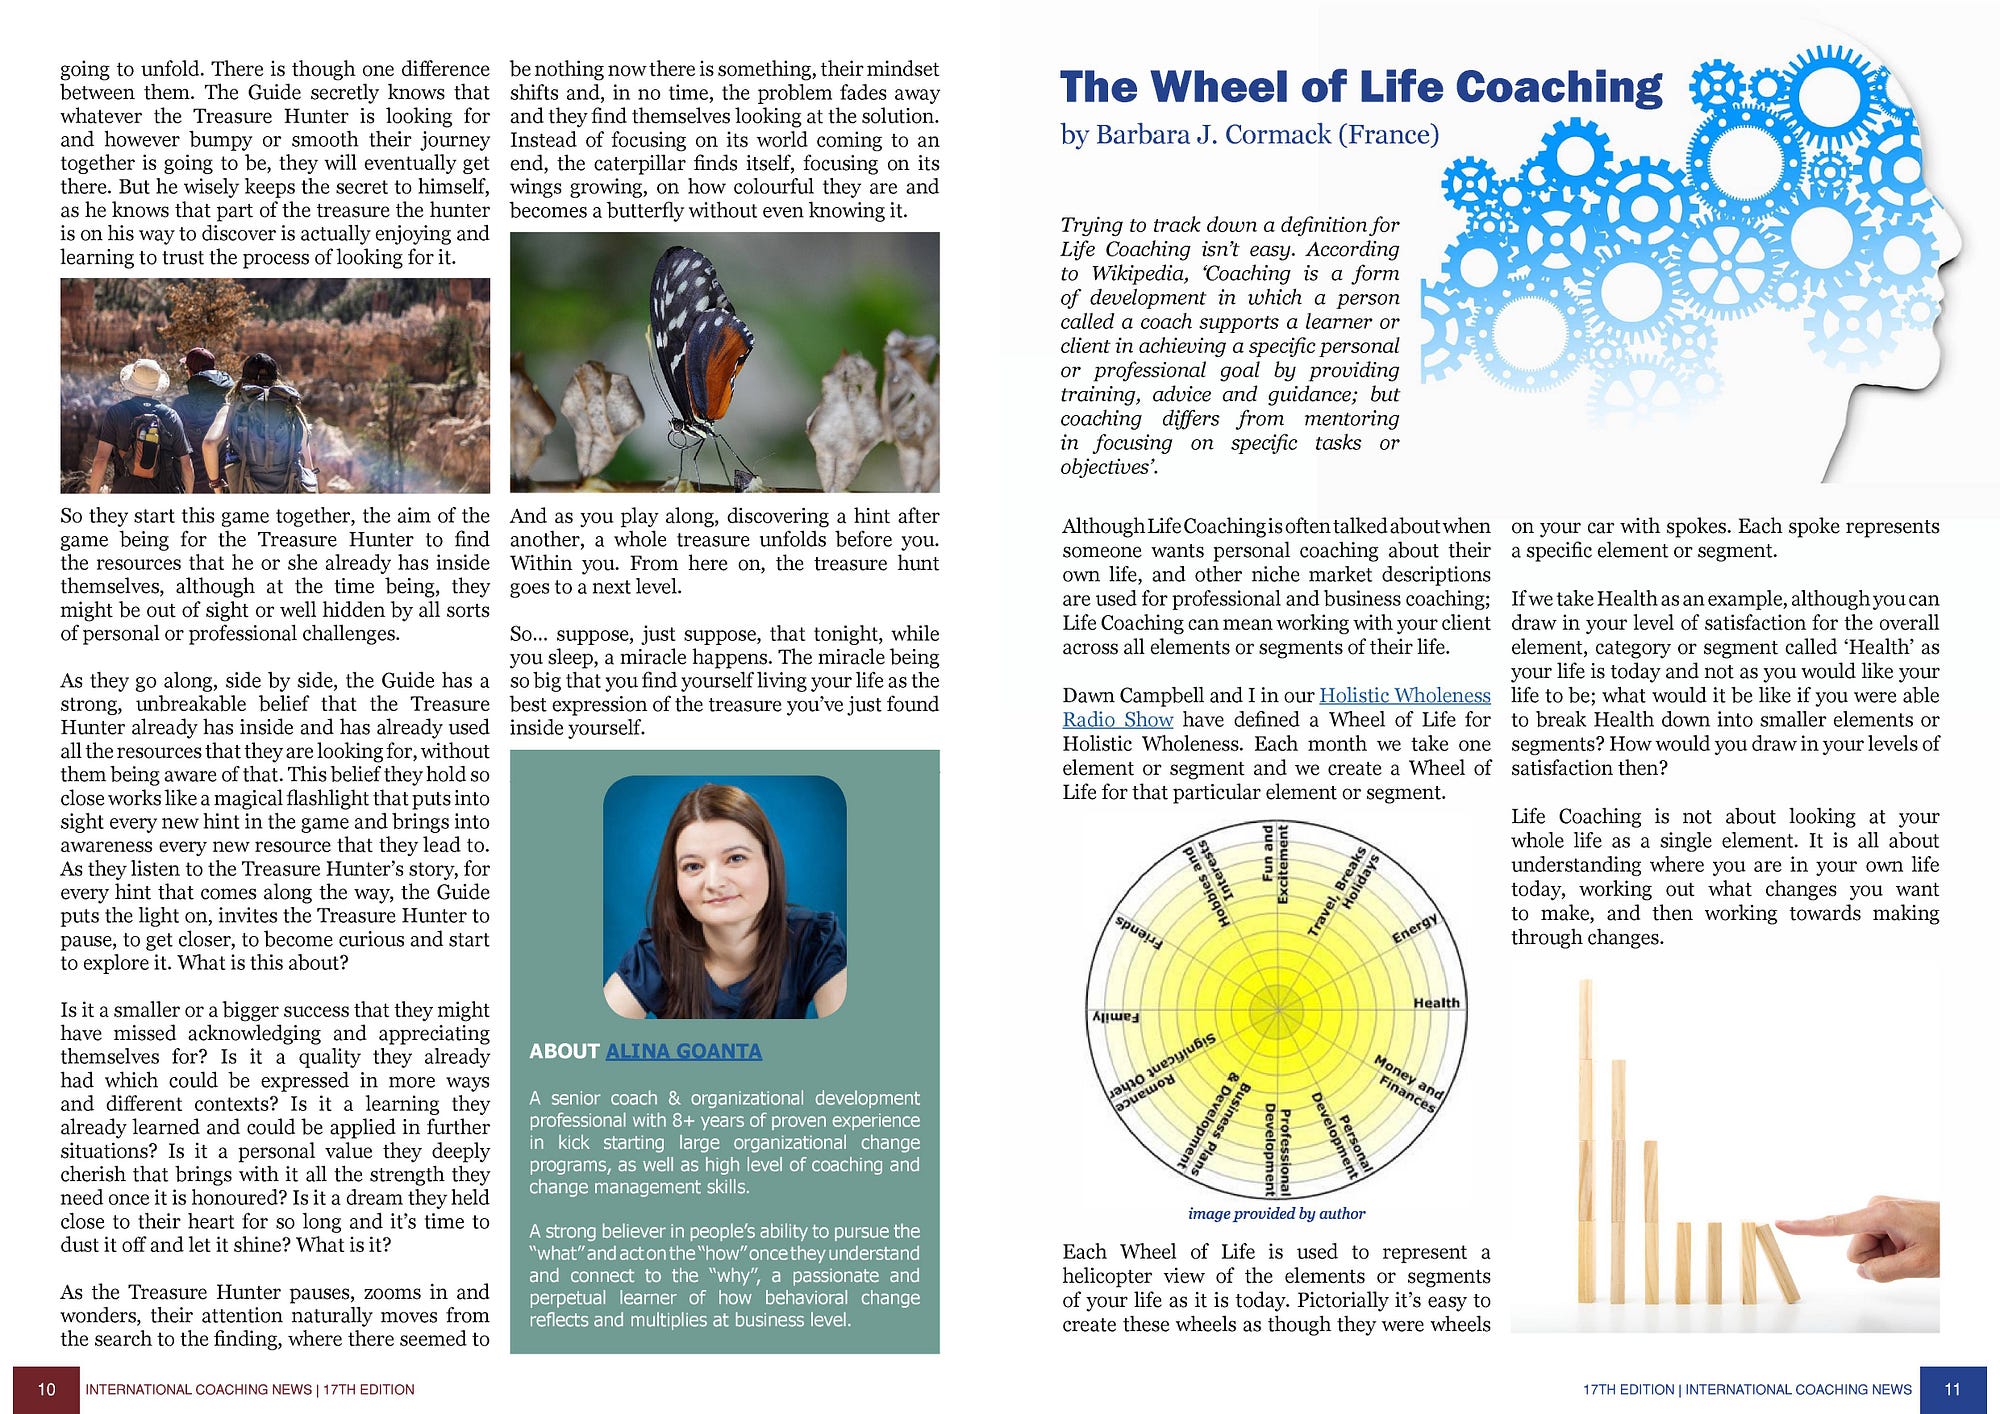 the wheel of life coaching – international coaching news – medium